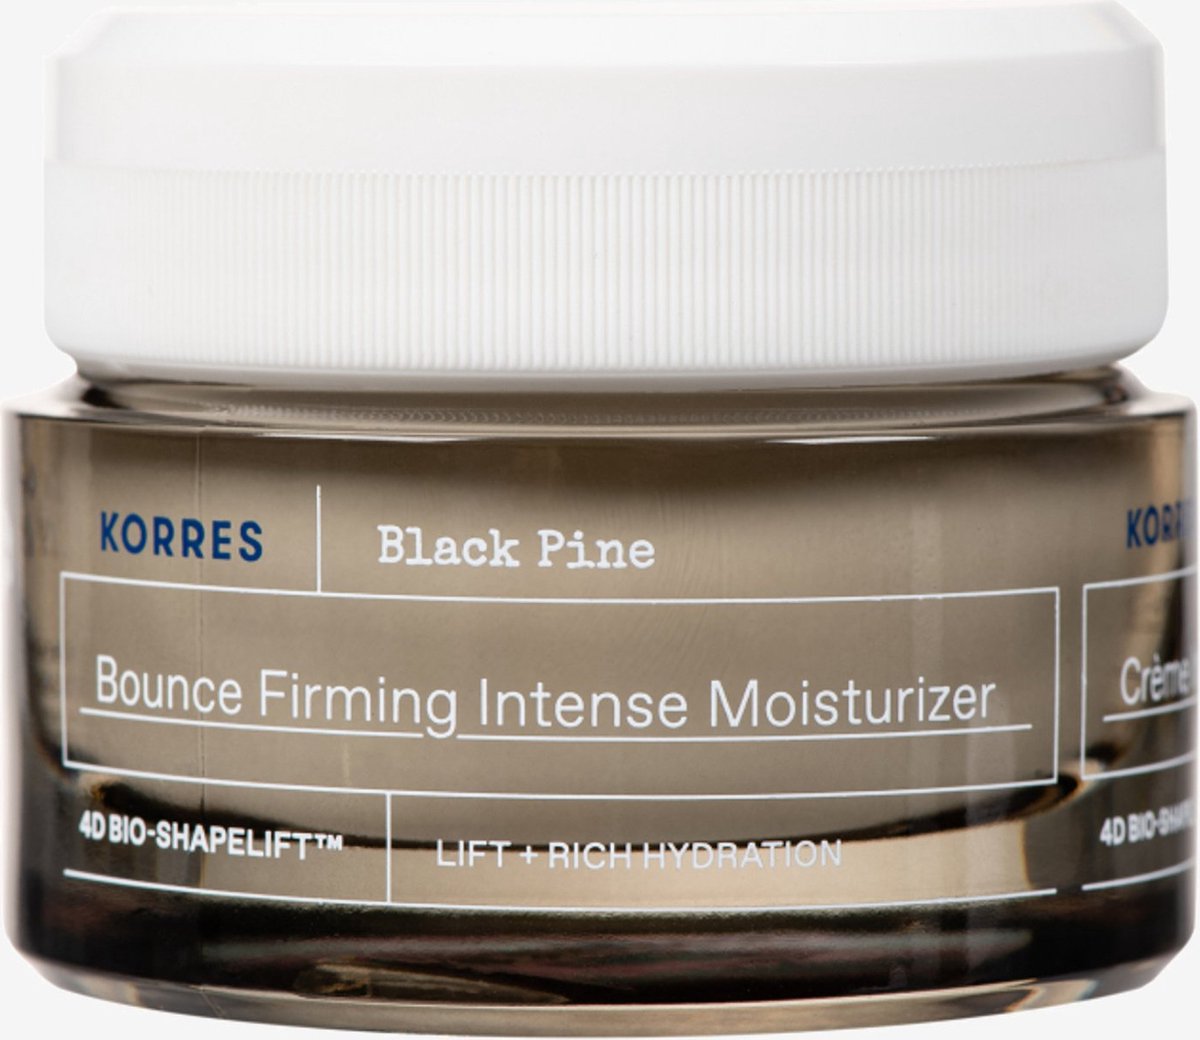 Korres - BLACK PINE 4D BioShapeLift™ Bounce Firming Intense Moisturiser [Dry] 40ml